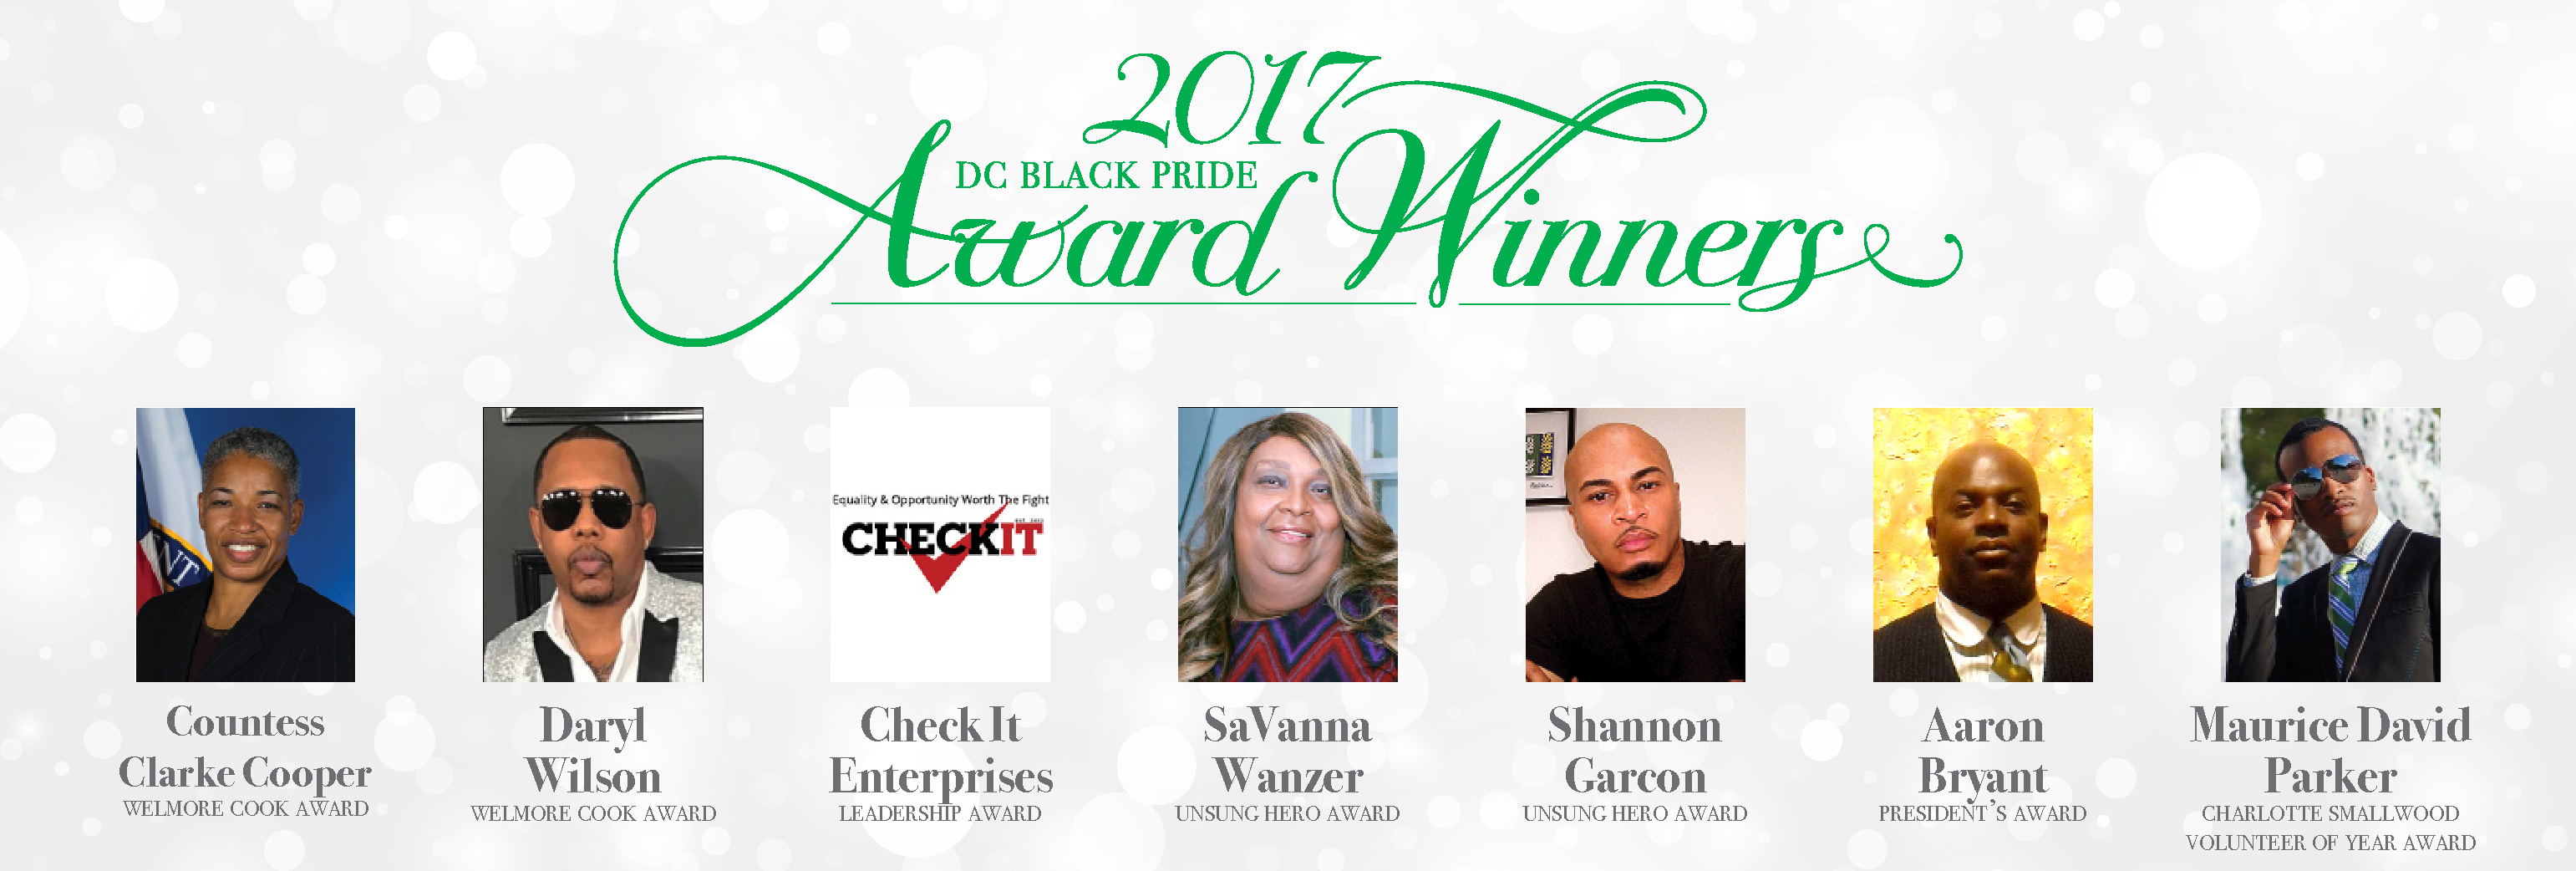 DC Black Pride Award Winners